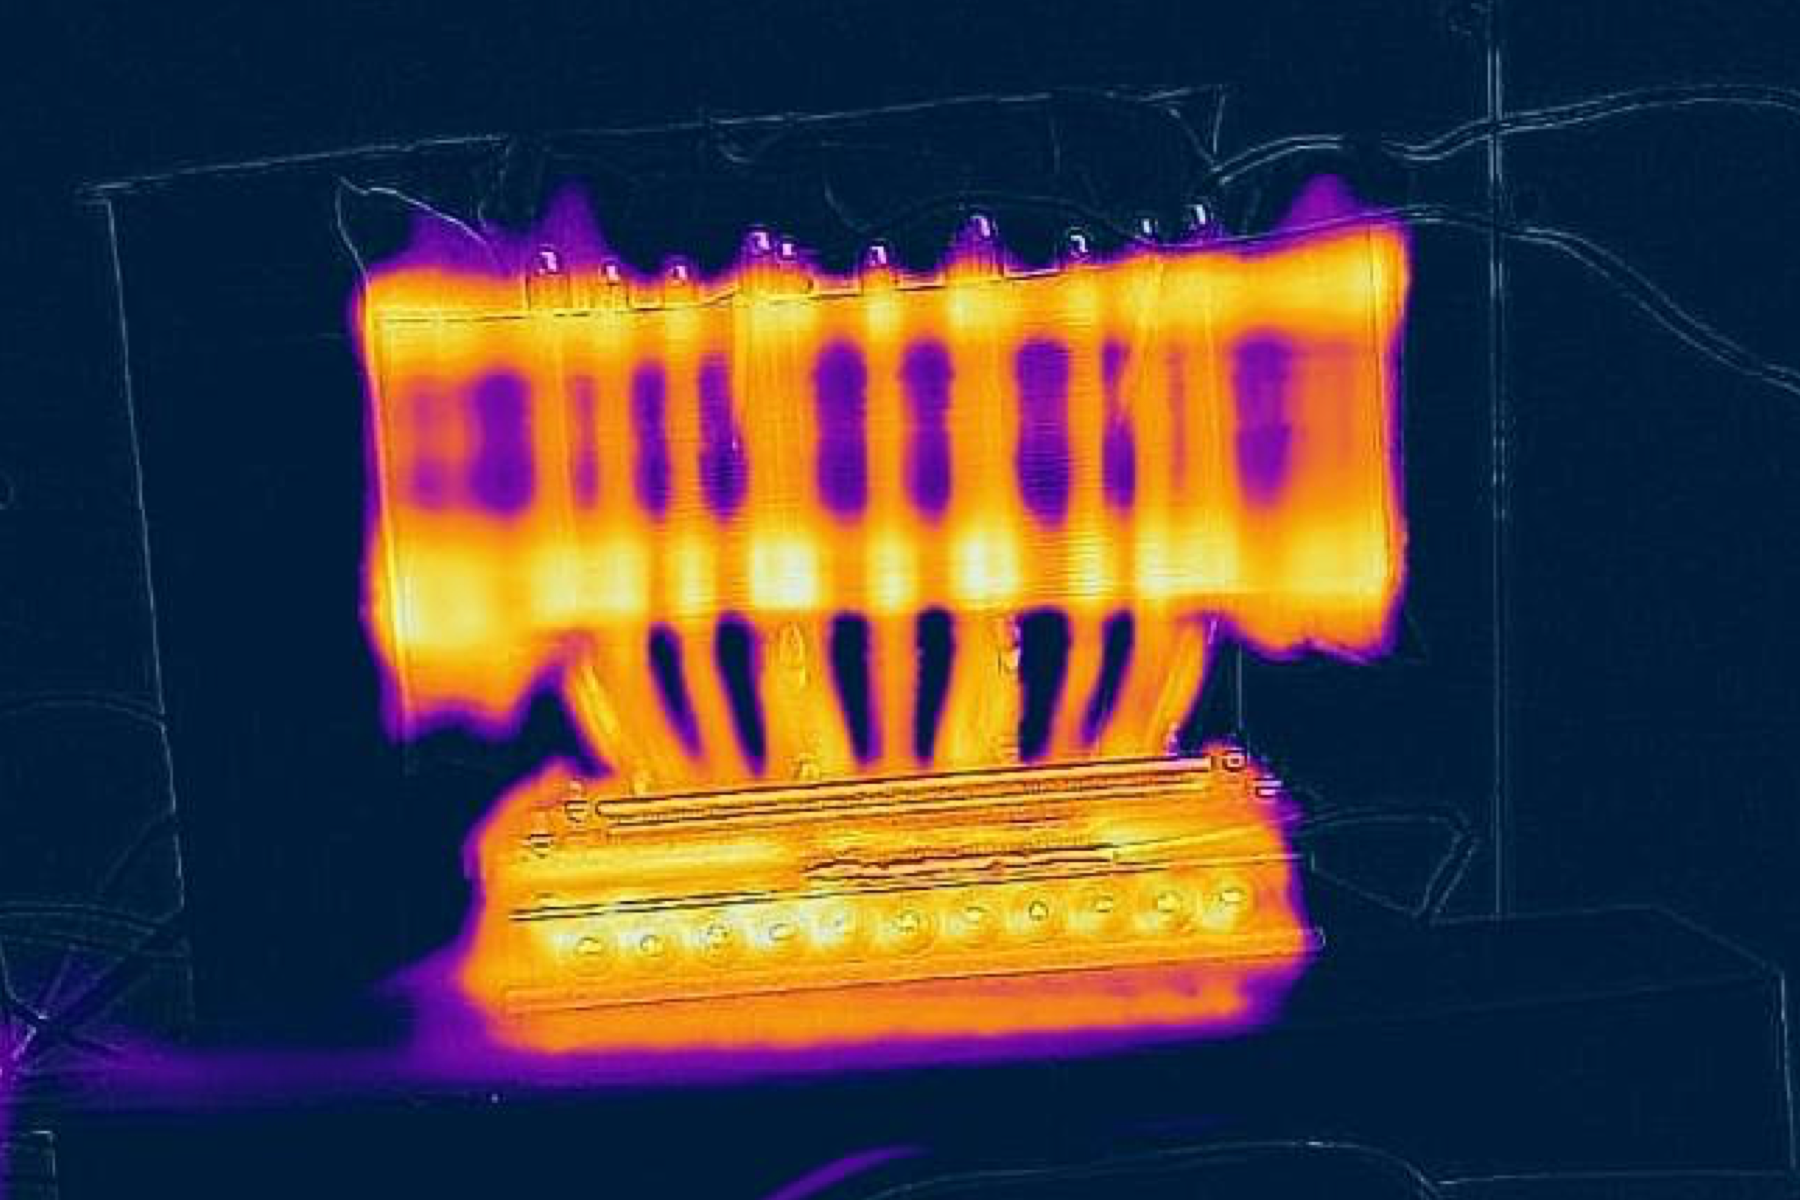 Thermal image of a heatsink